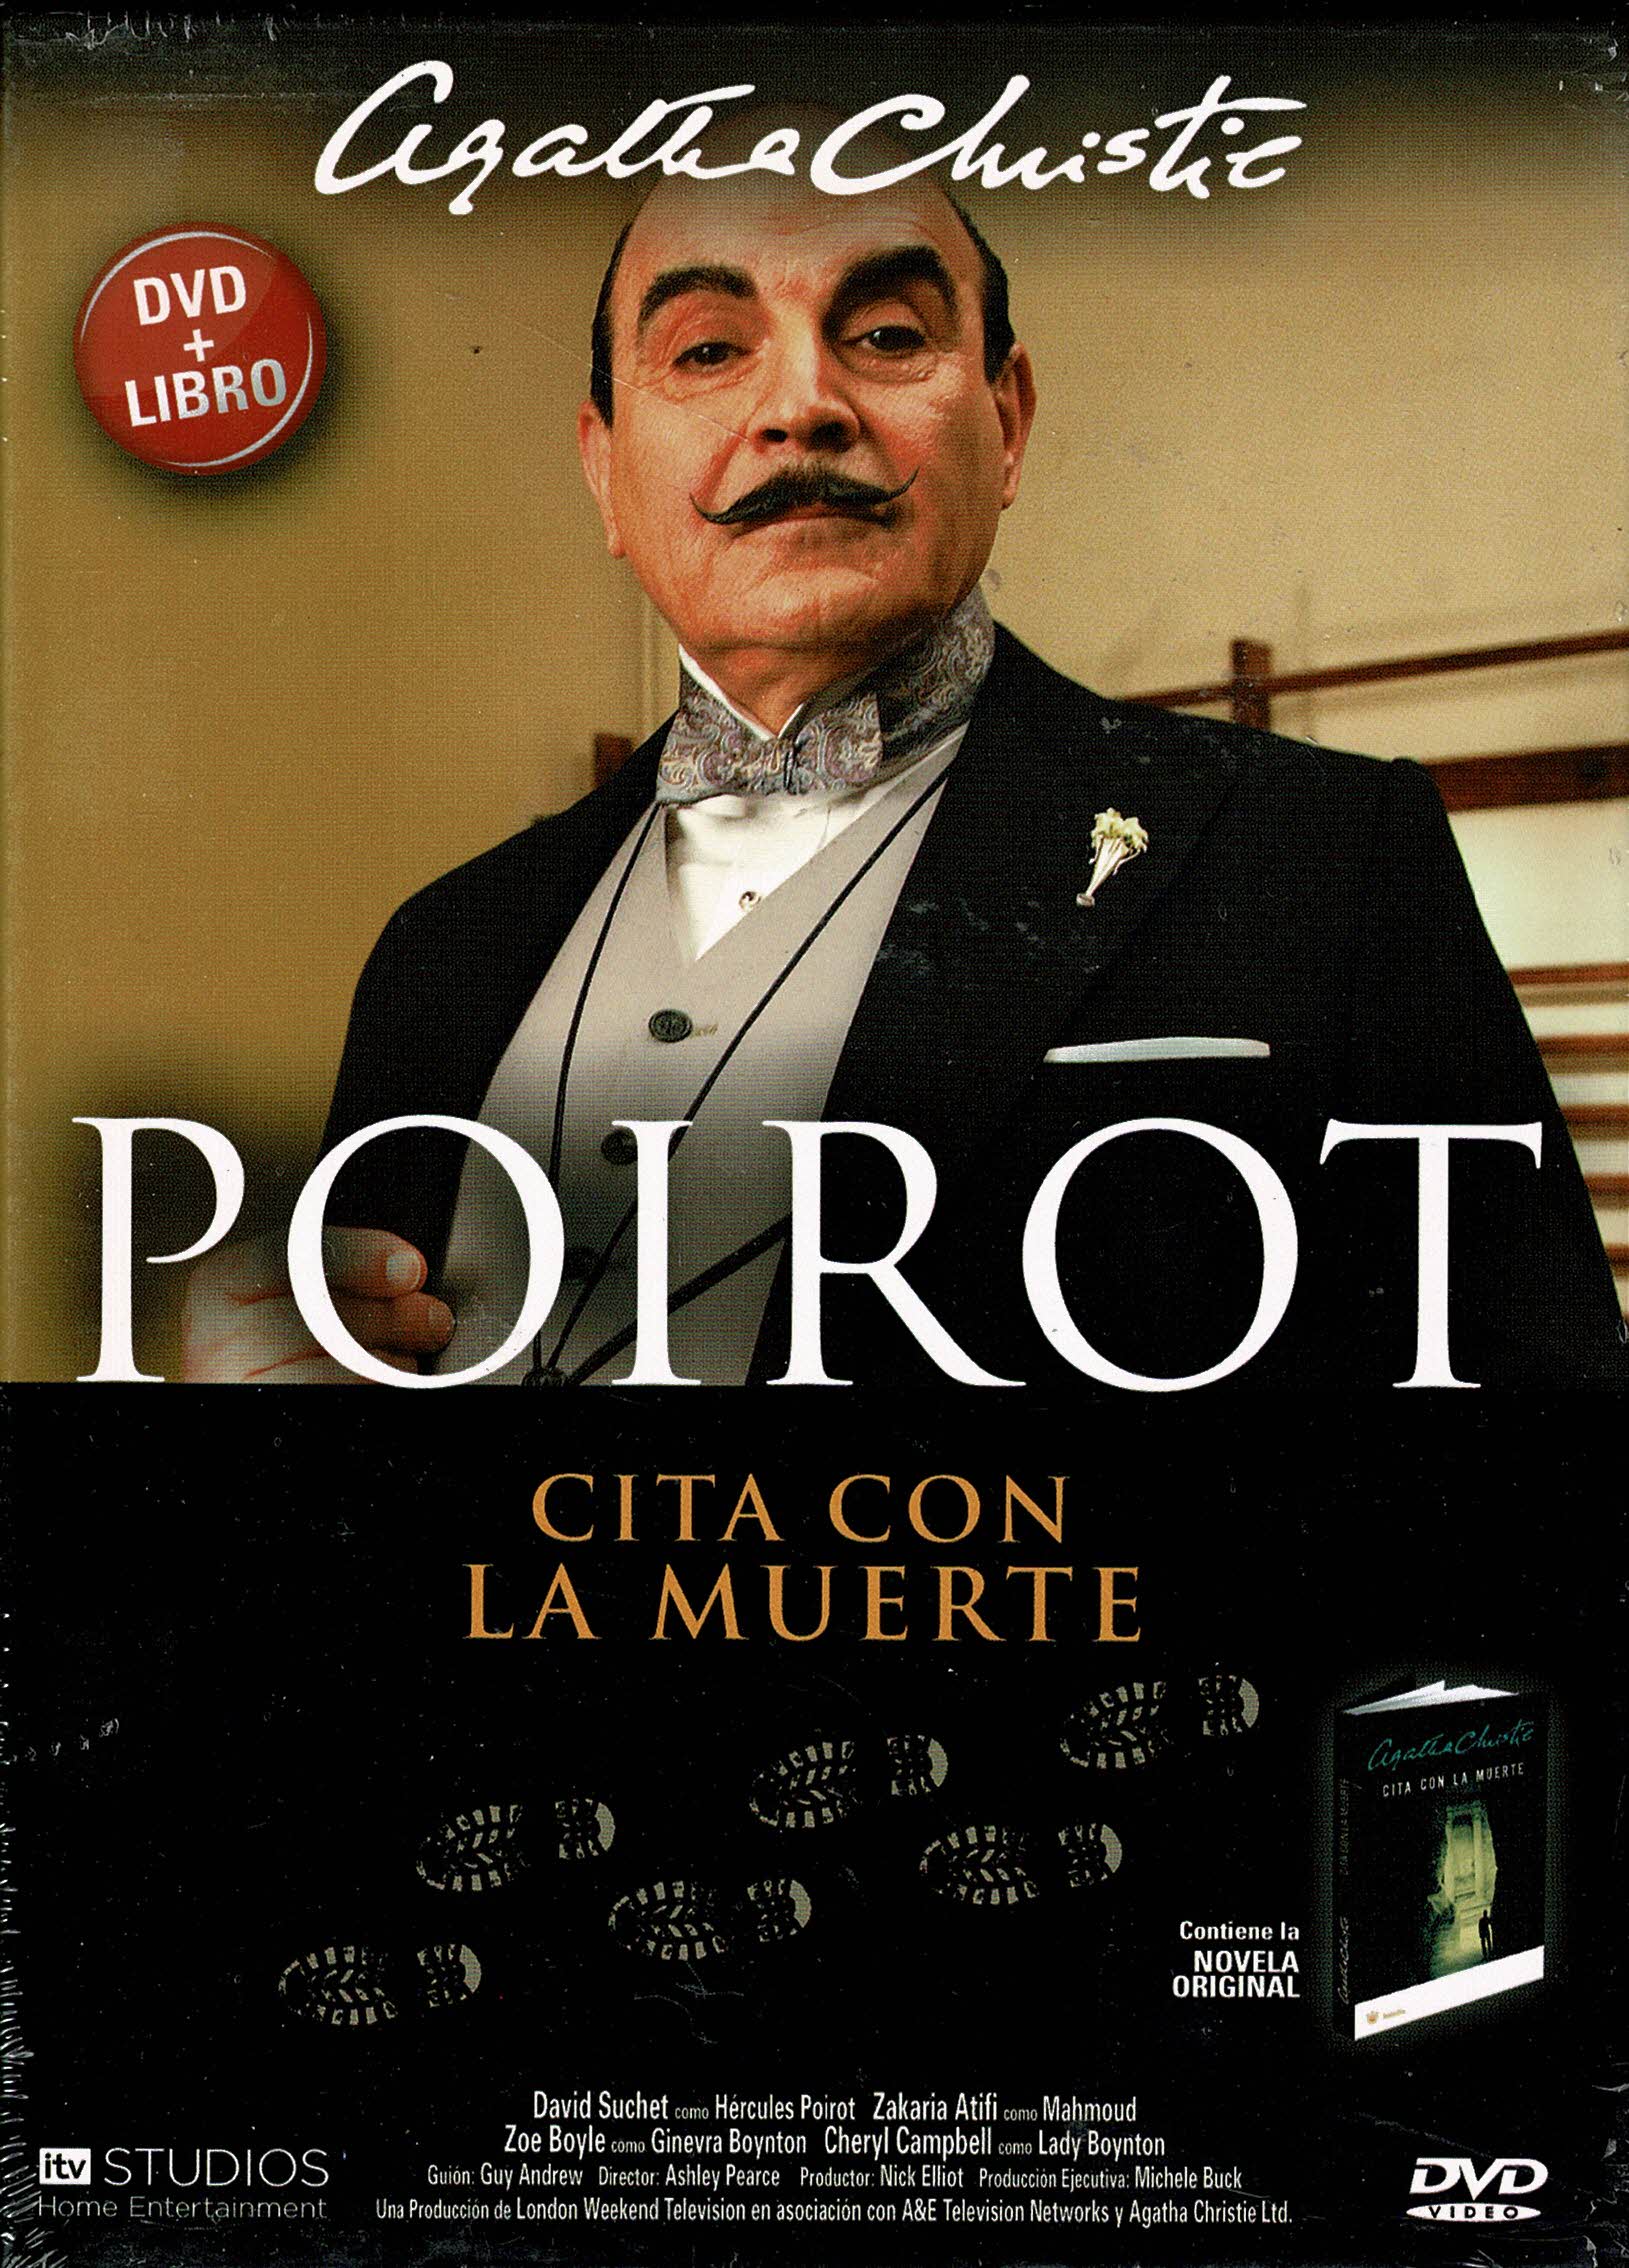 Poirot  Cita Con la Muerte  Caja Incluye la Novela Original de Agatha Christie